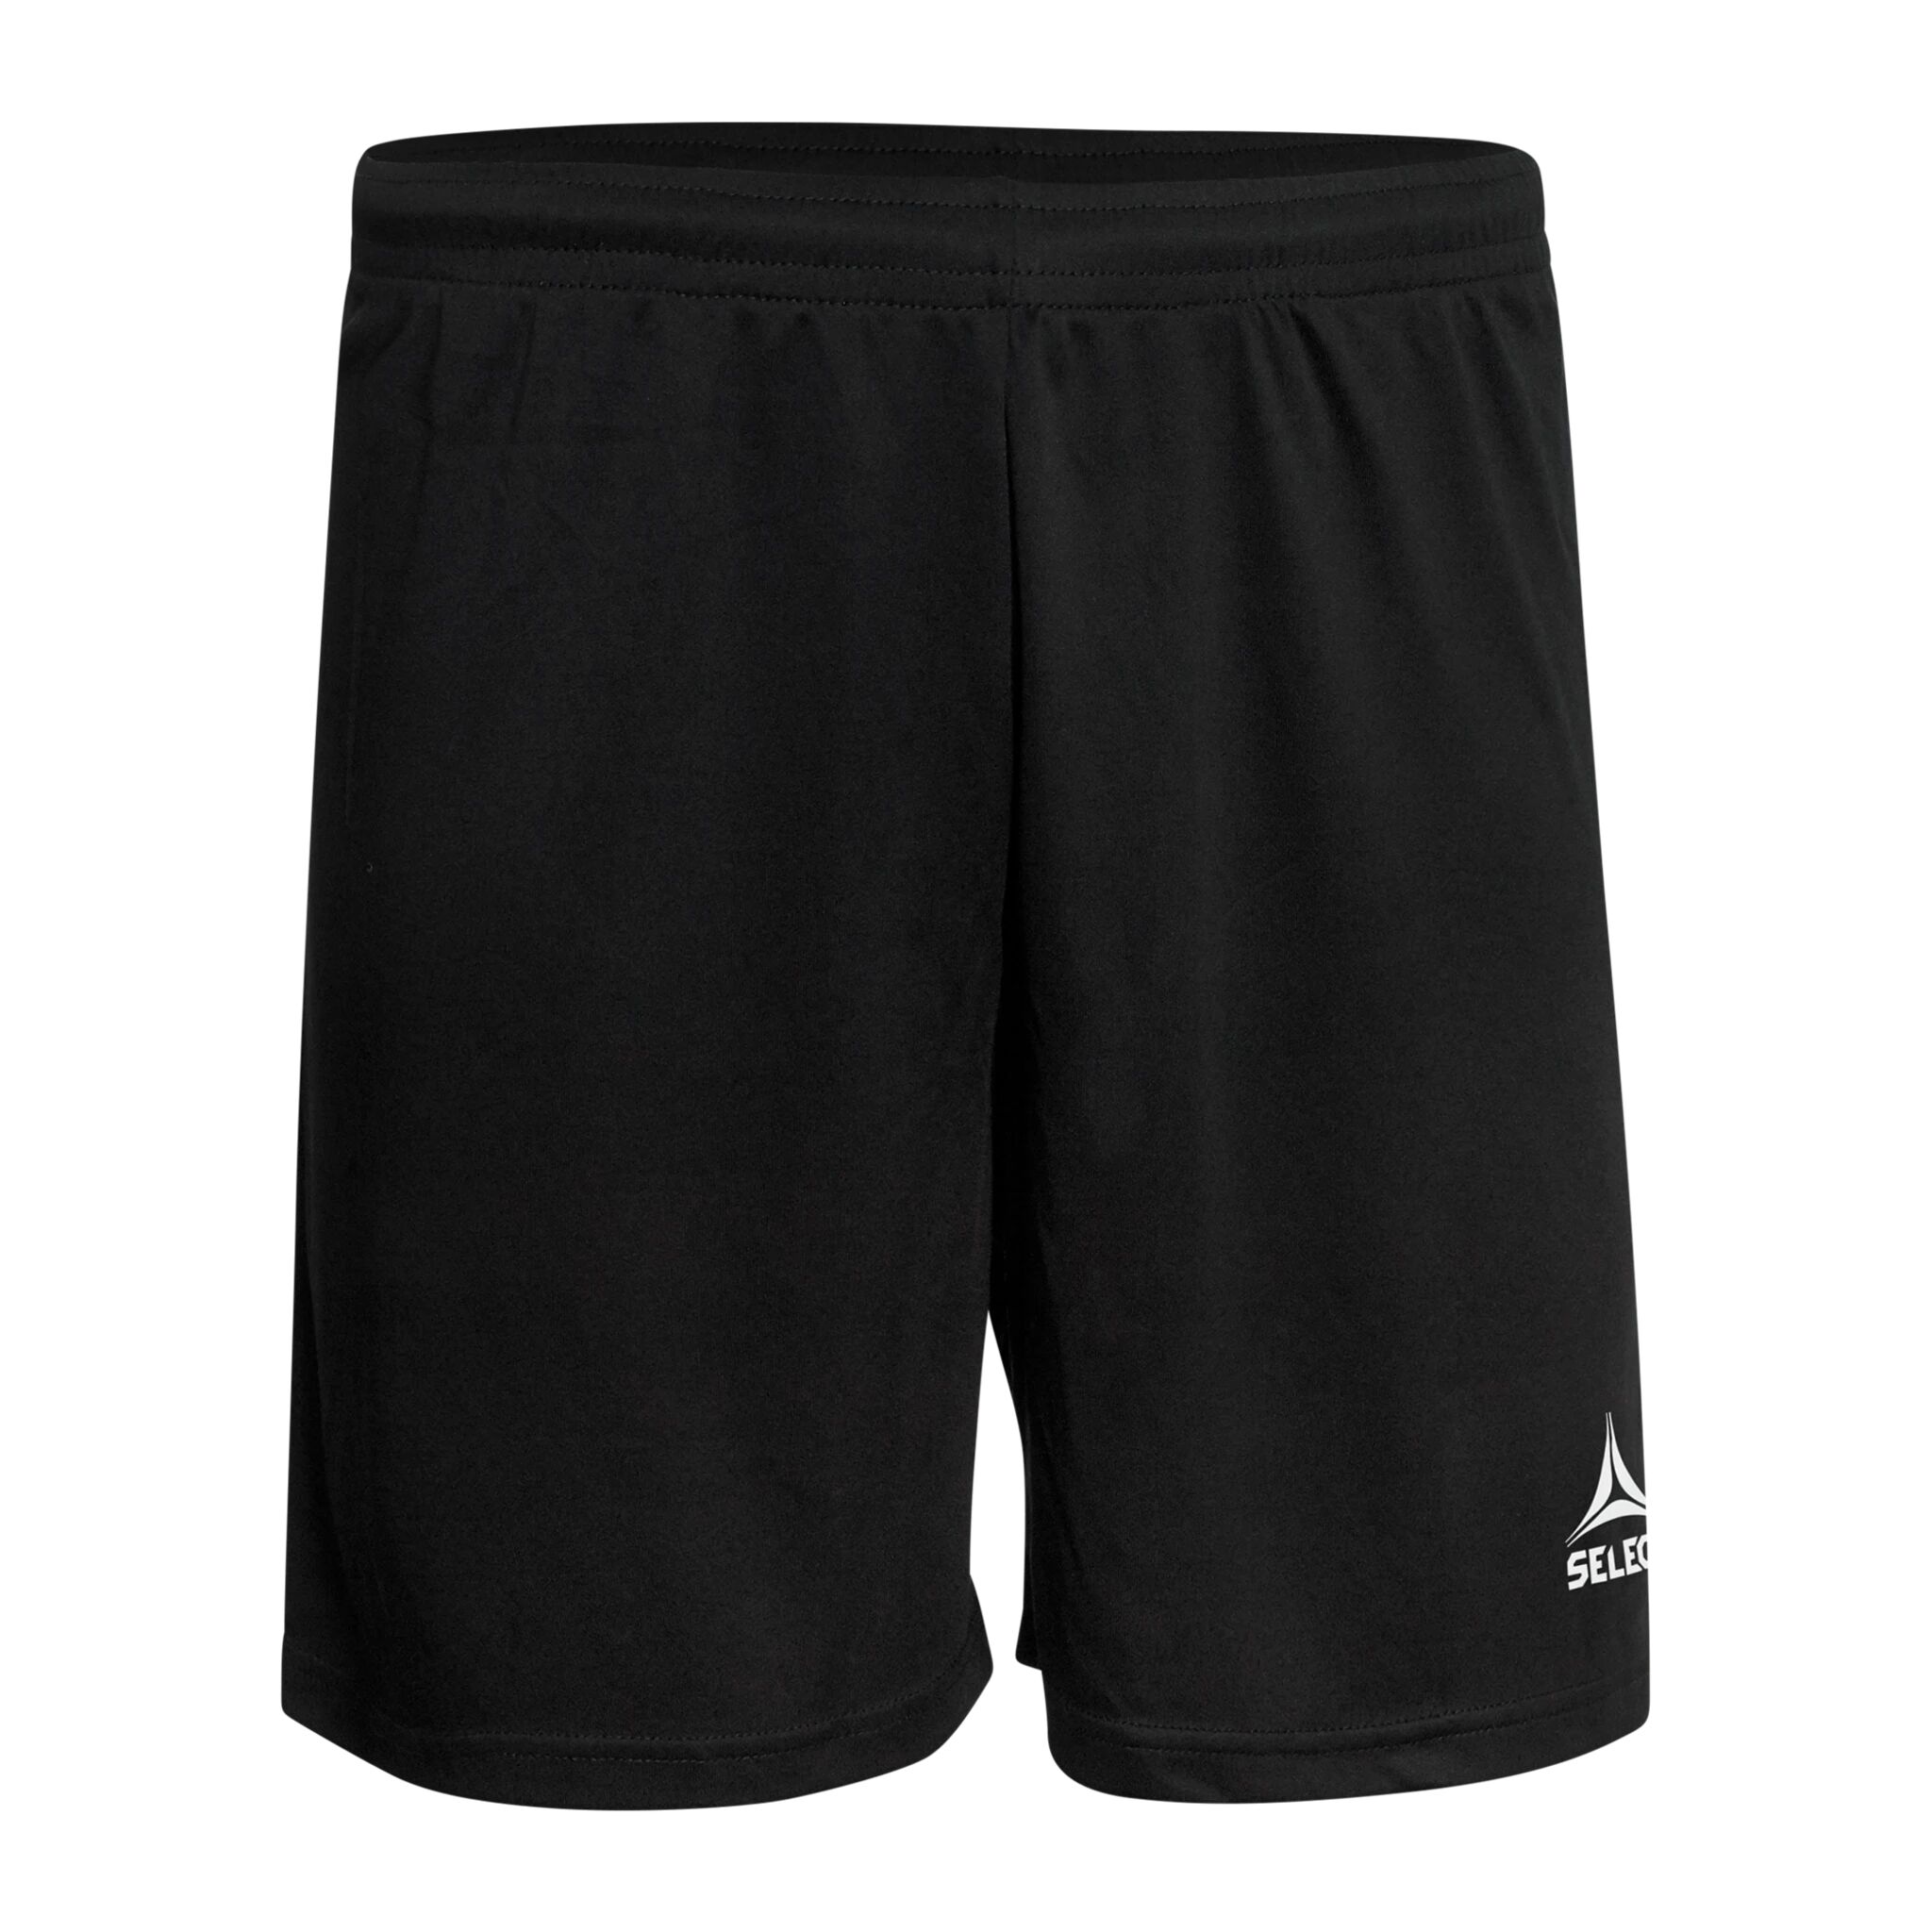 Select Player shorts Pisa, shorts senior S BLACK